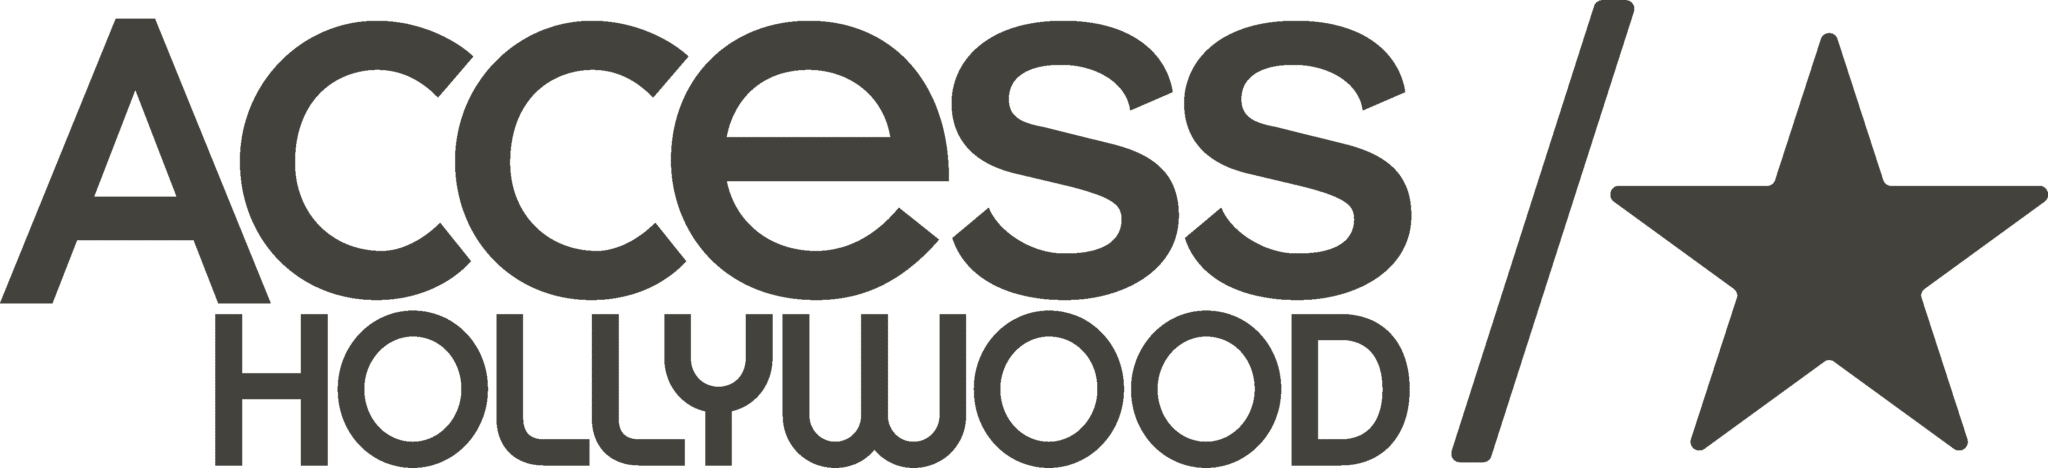 access-hollywood-logo-greyscale